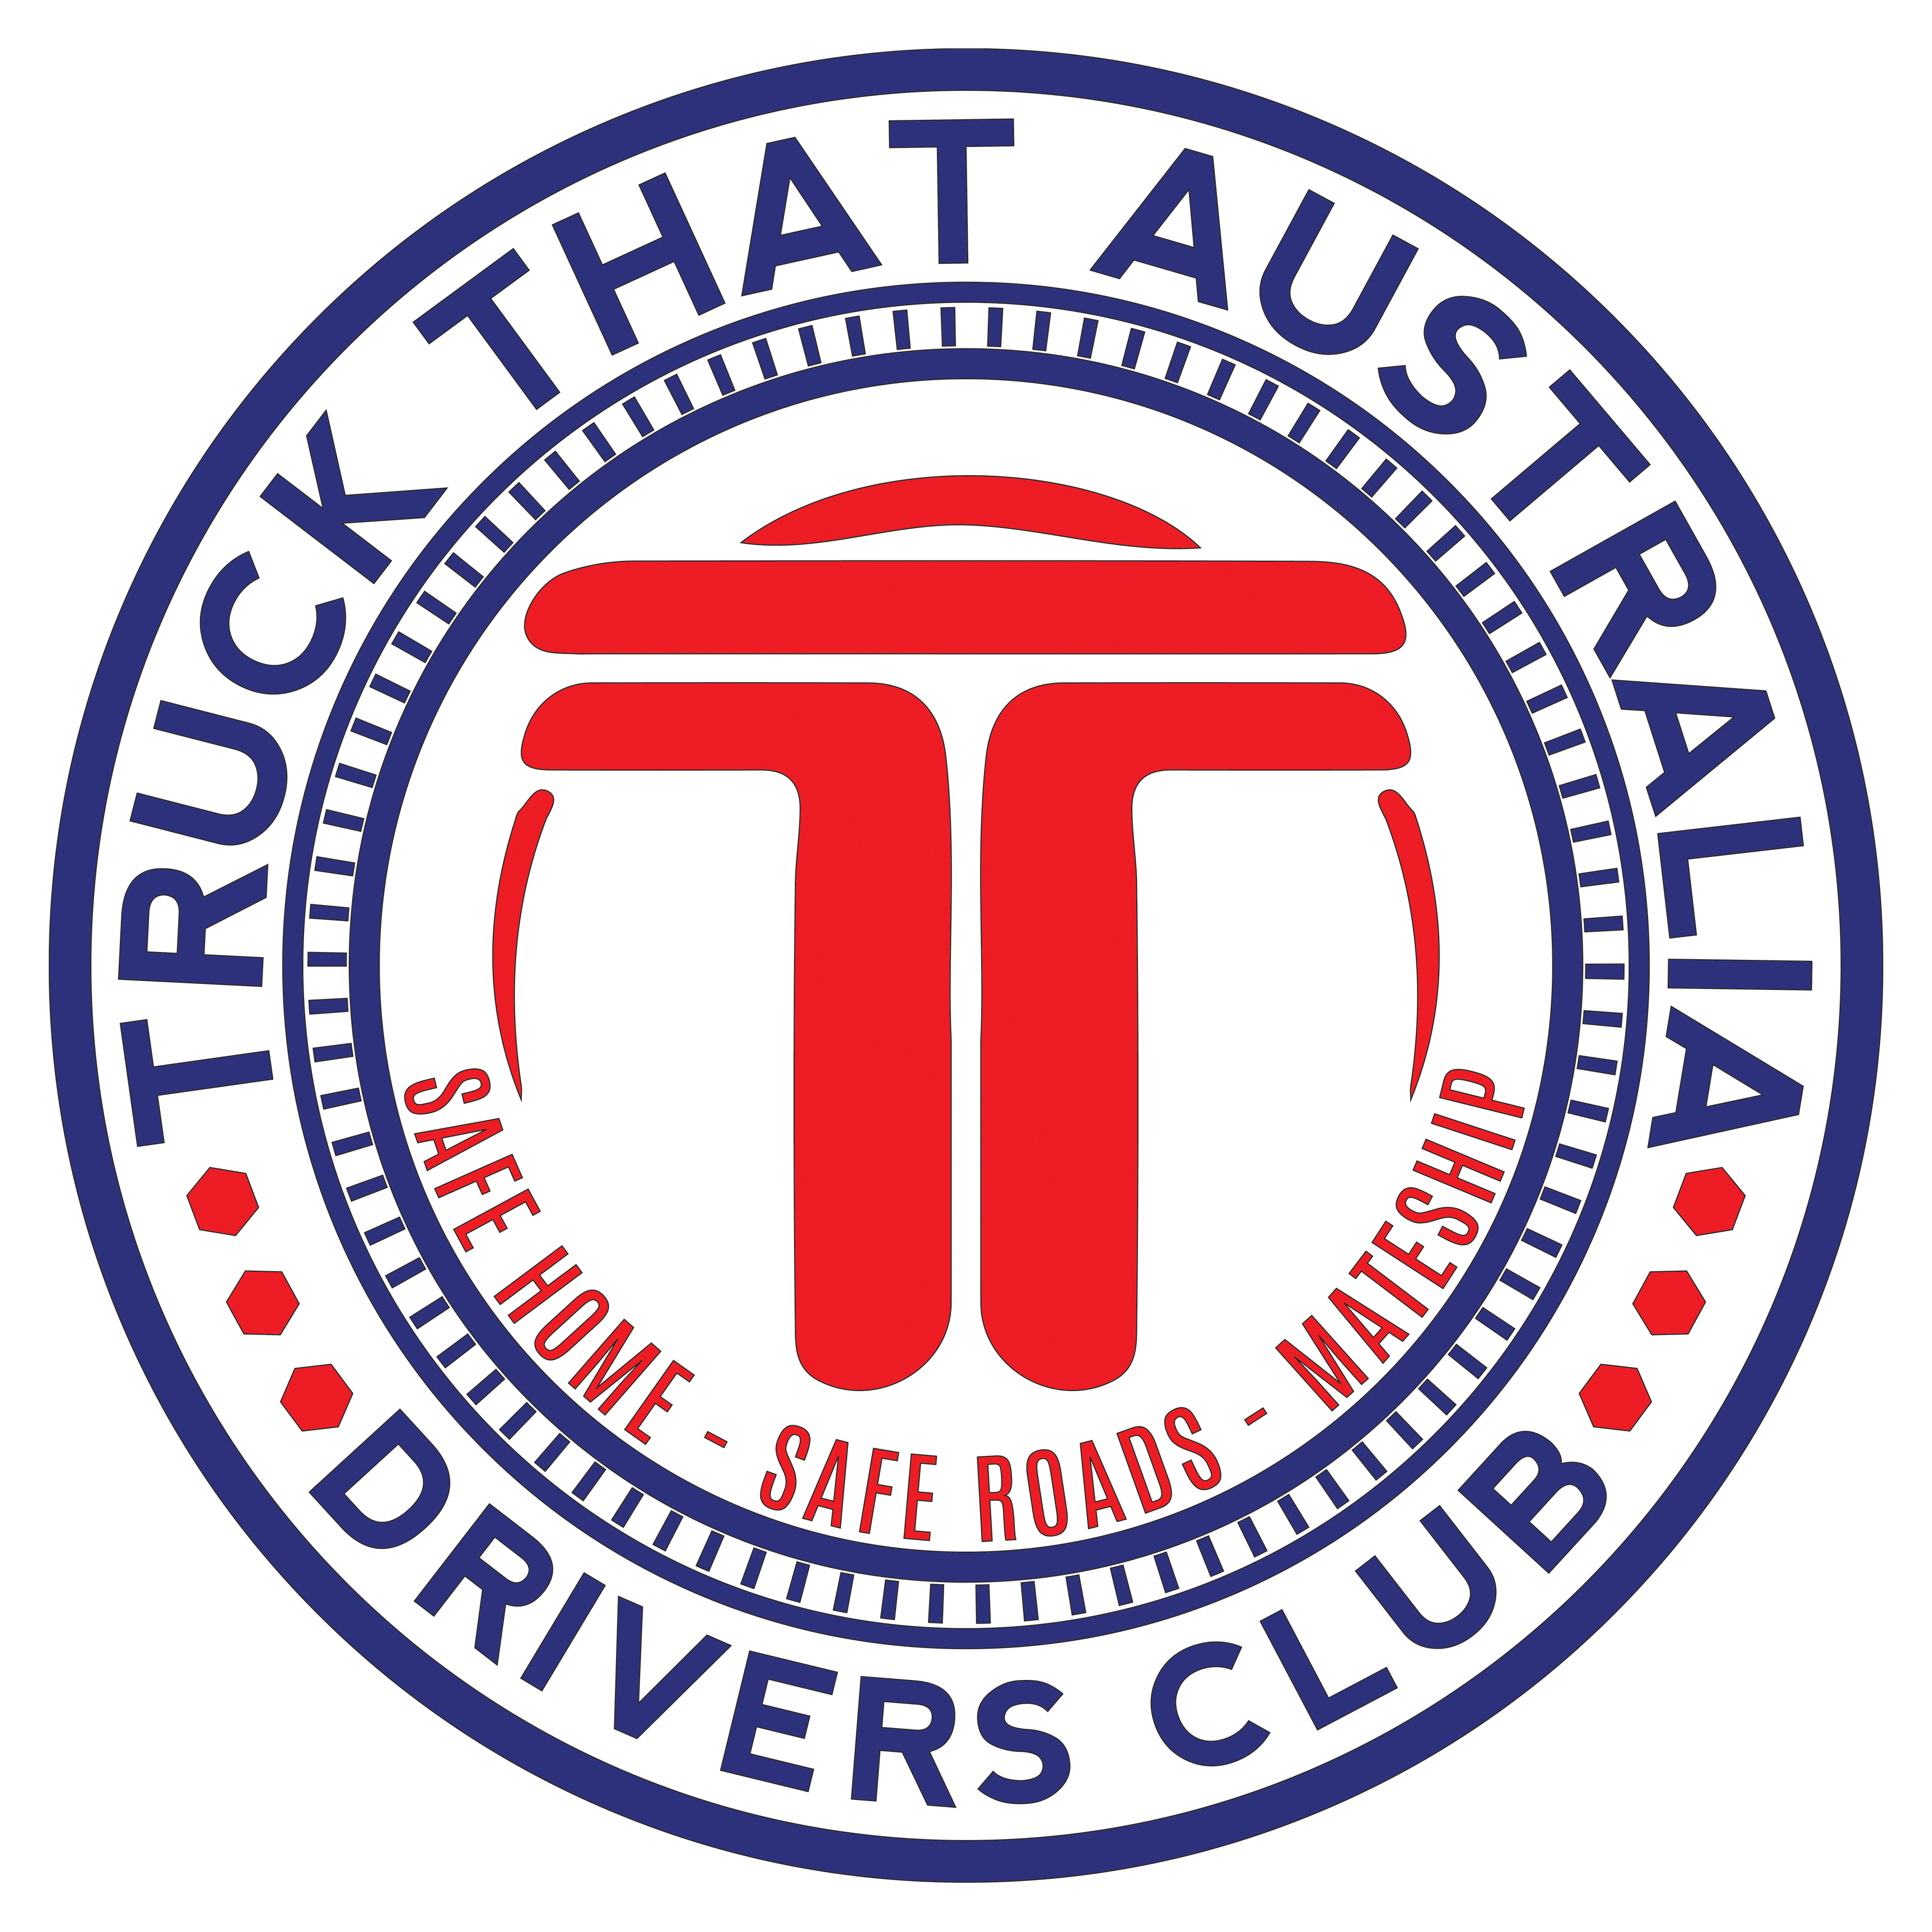 TRUCK That Australia Drivers Club logo